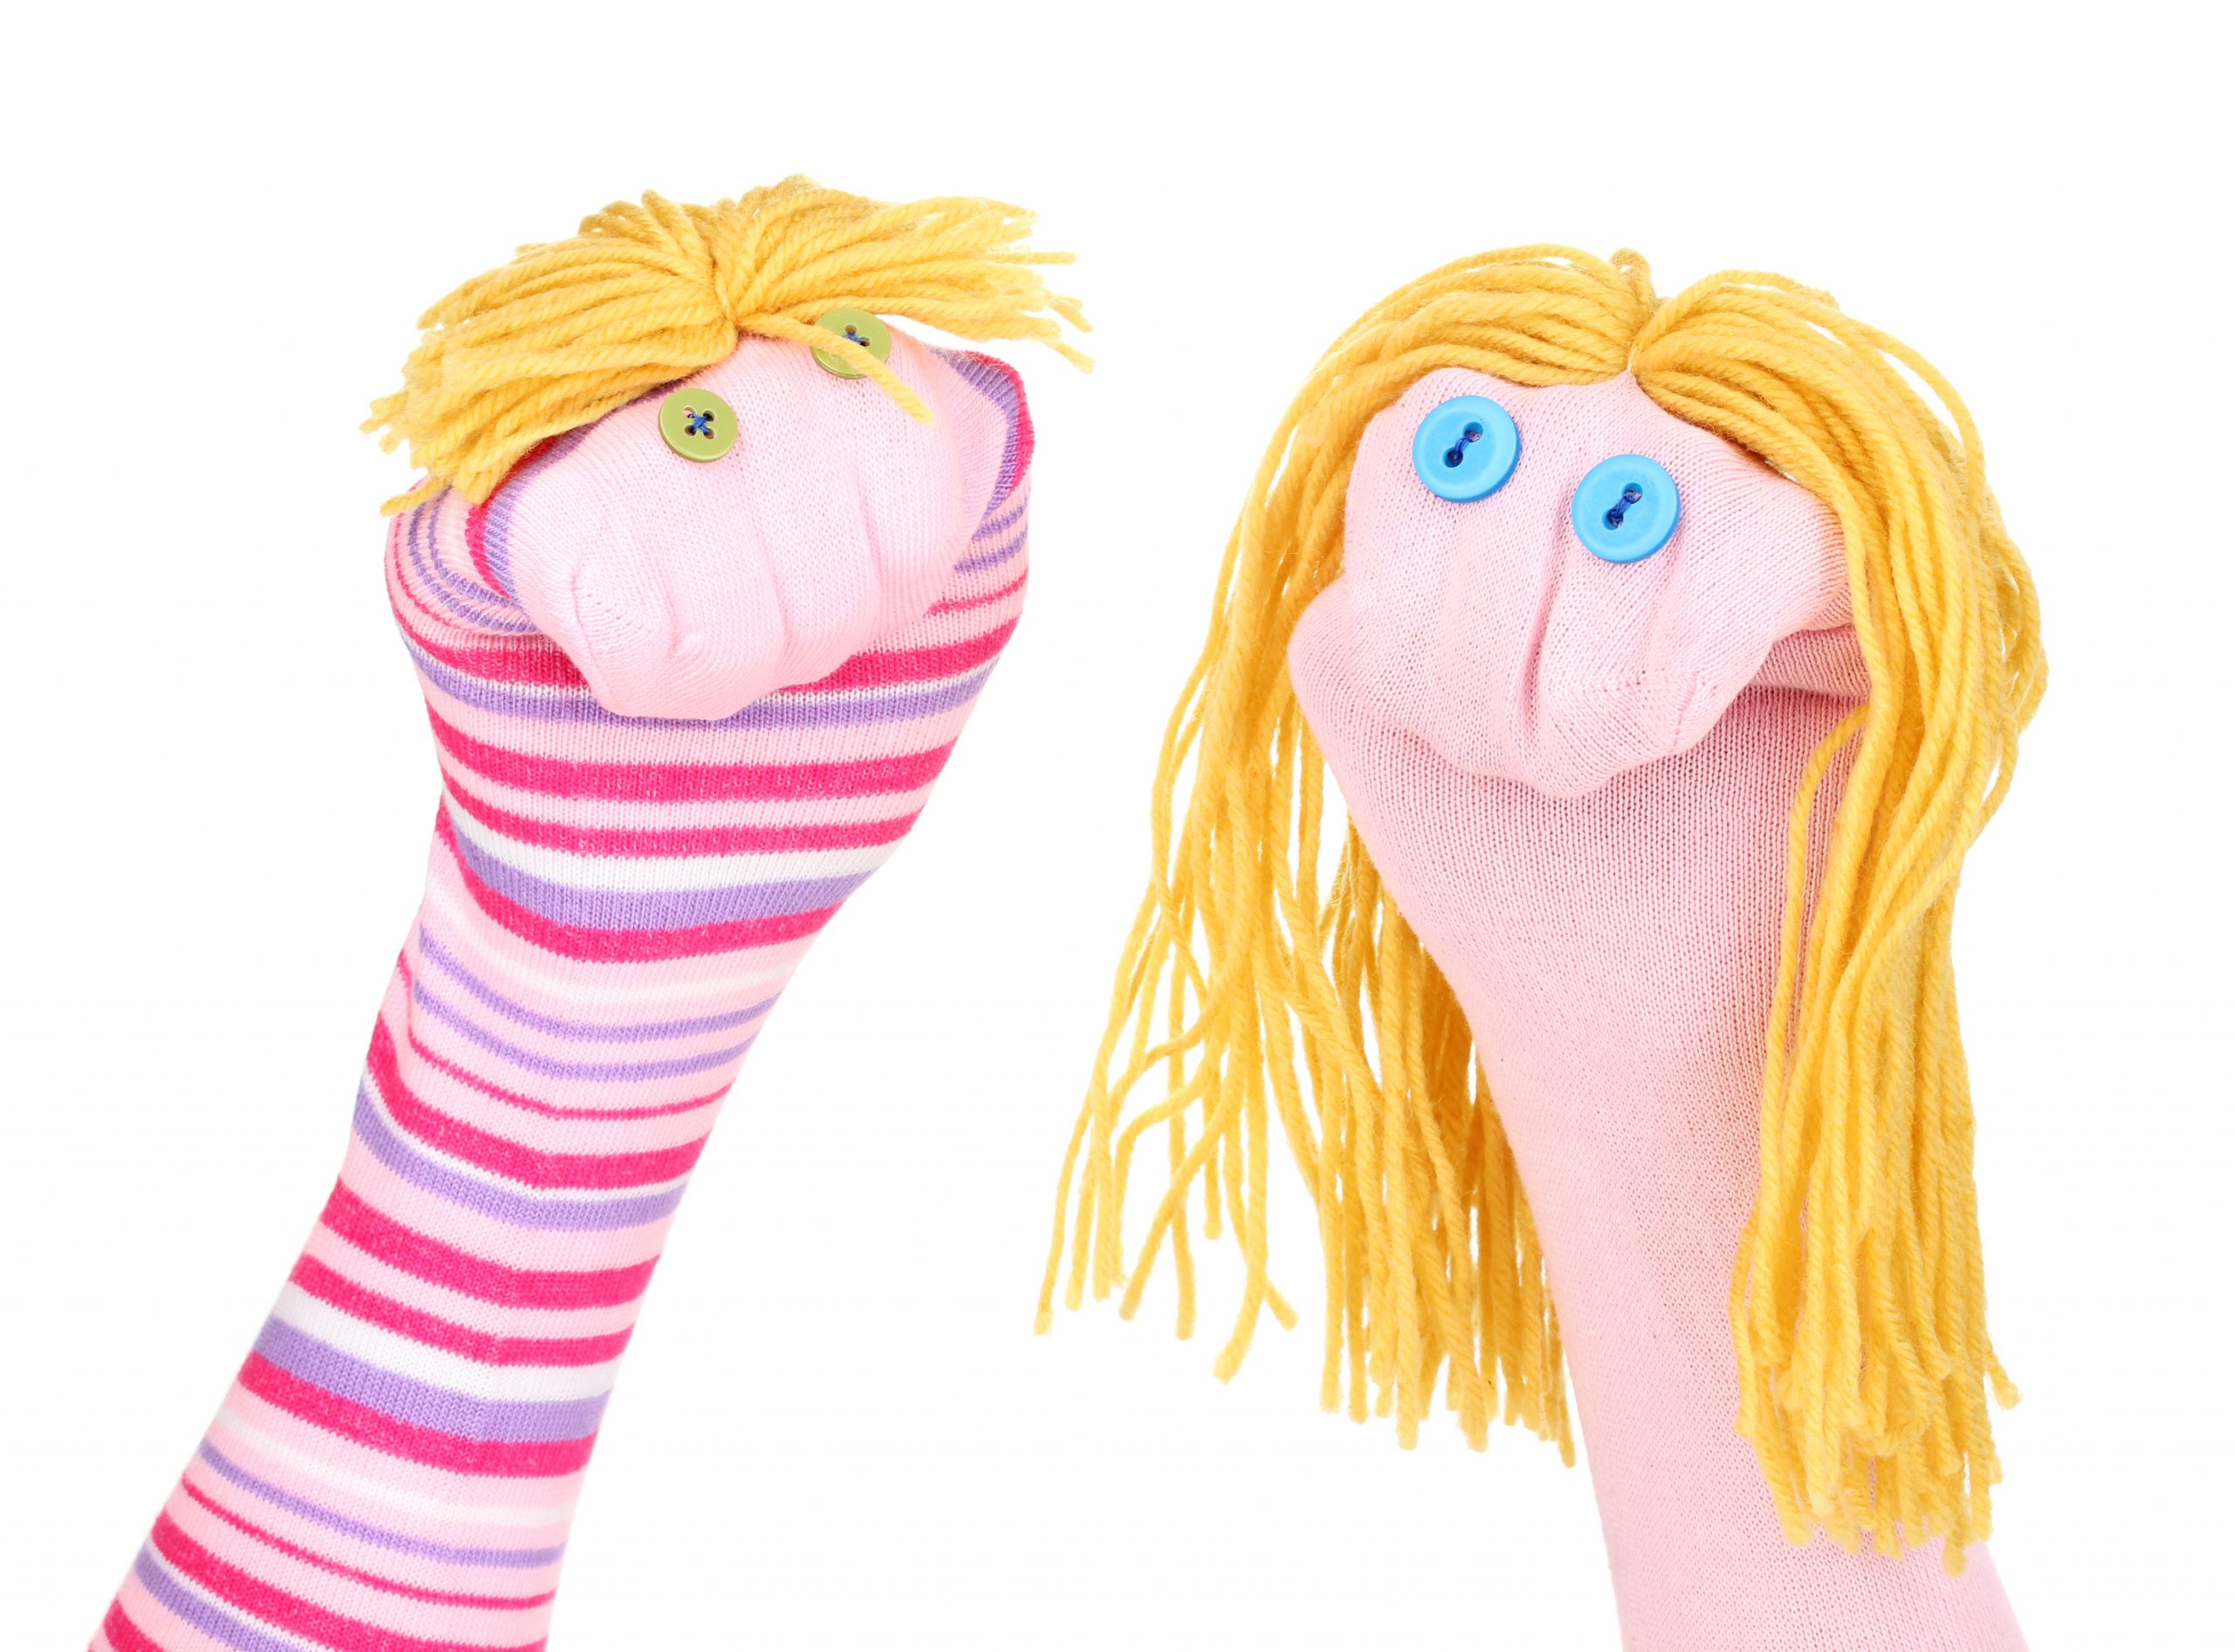 Cute sock puppets